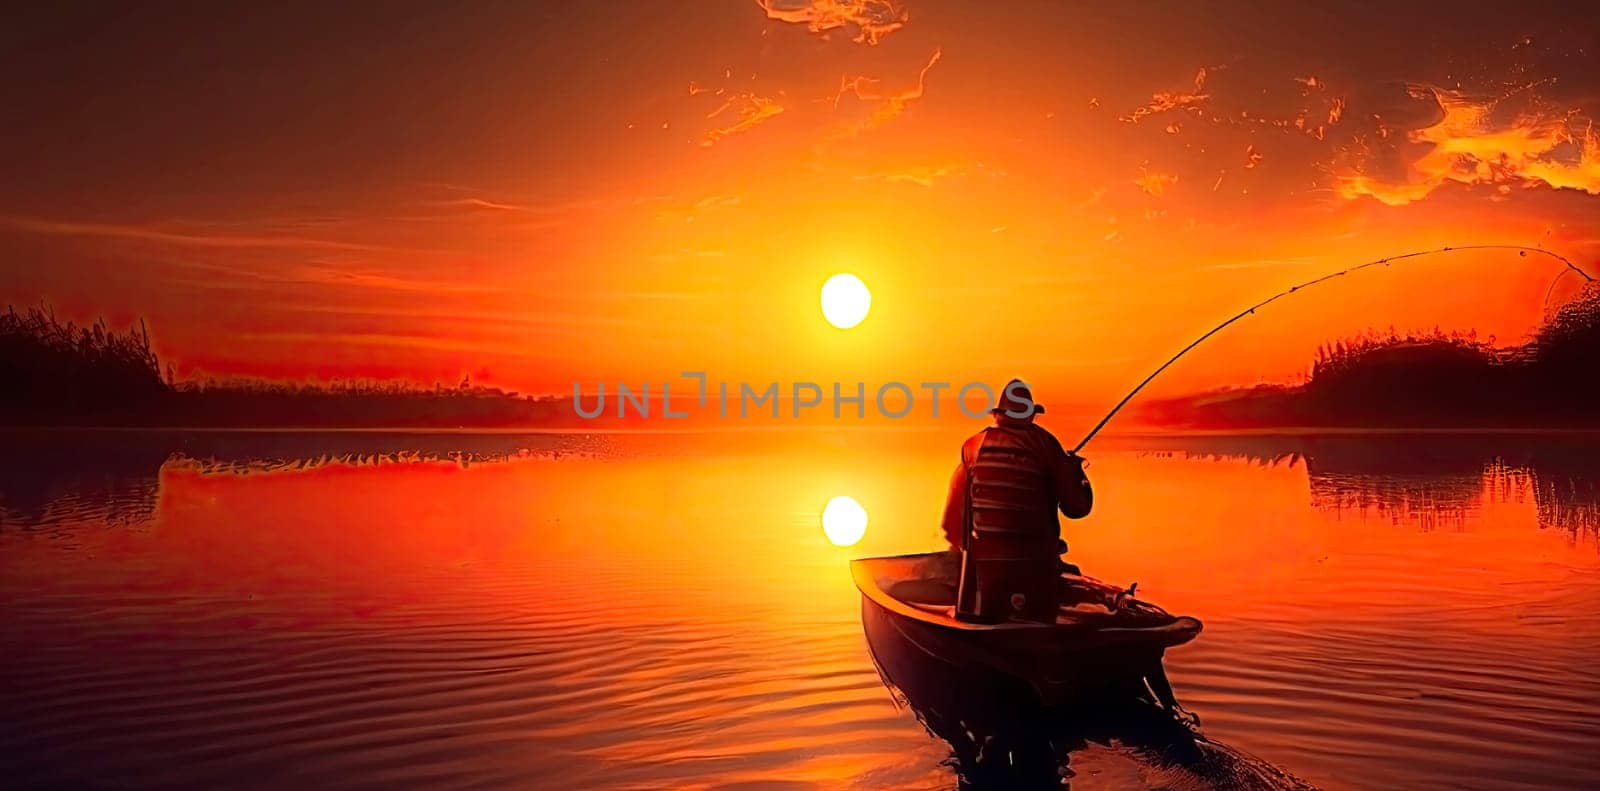 boat fishing. nature by yanadjana